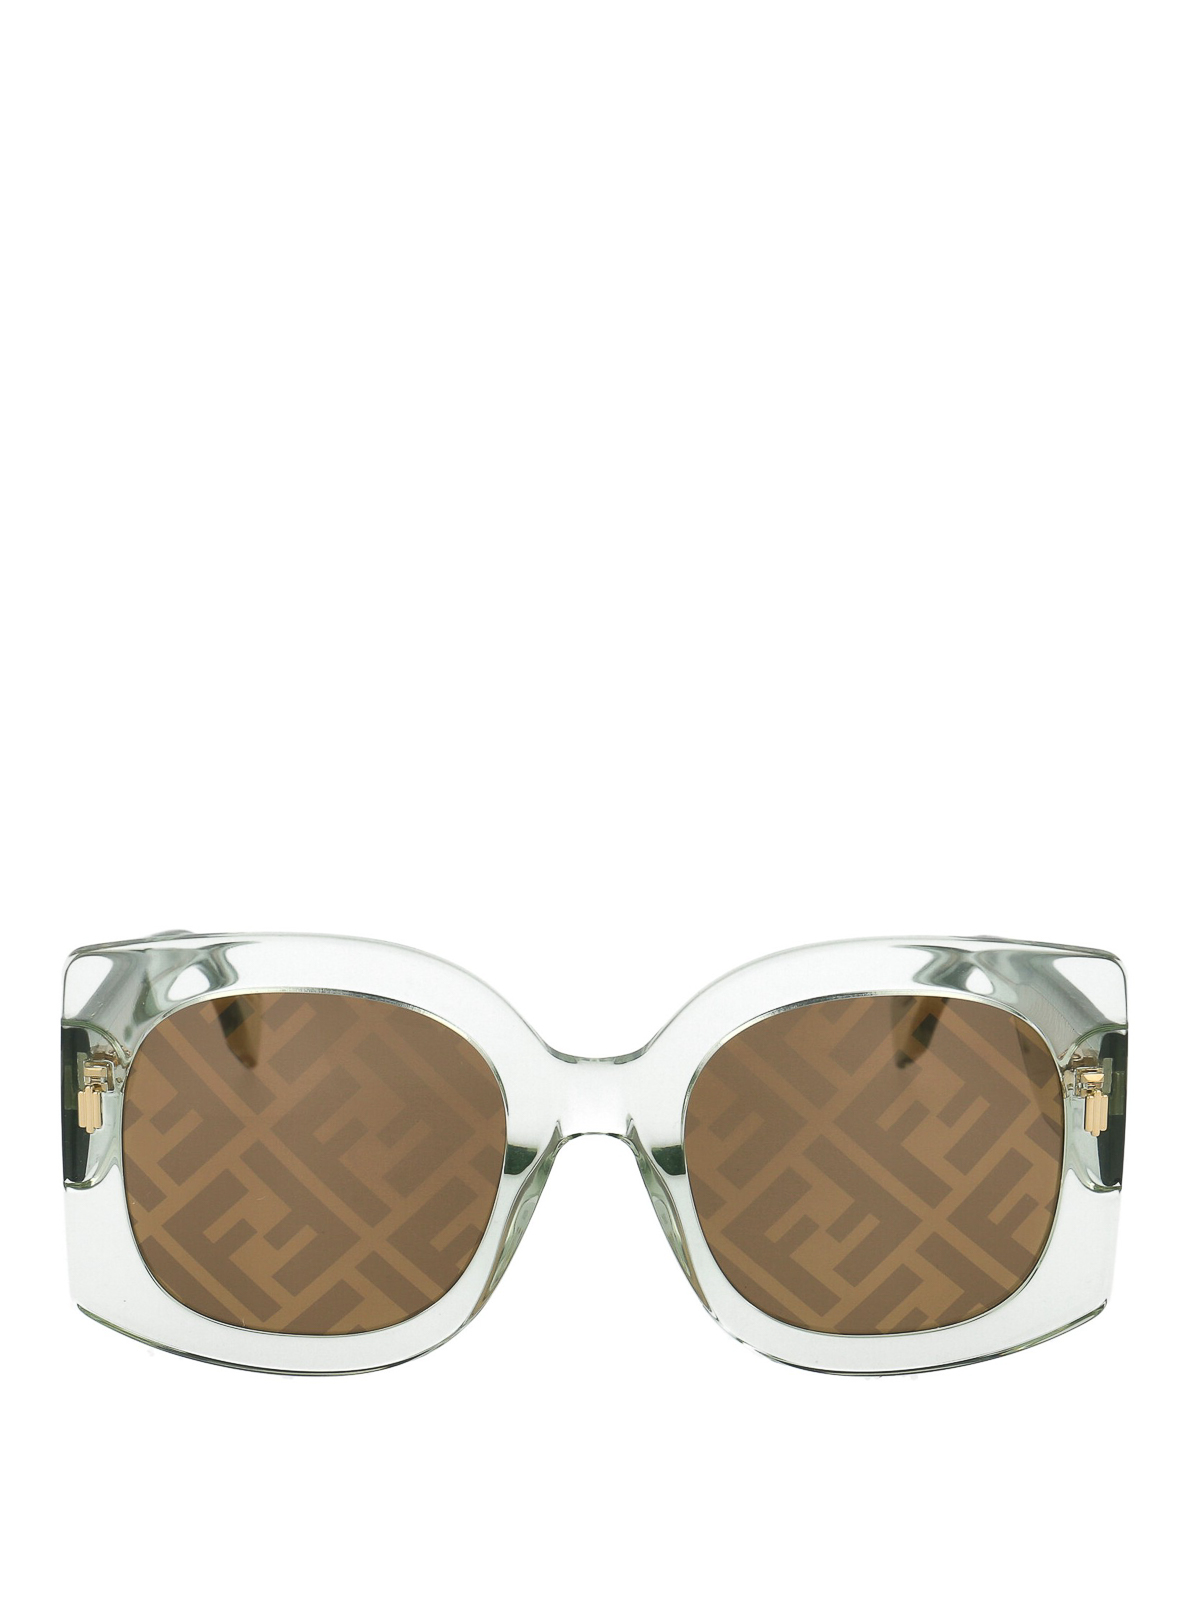 Fendi FE40066U 99 Grey & Gold Shiny Sunglasses | Sunglass Hut USA